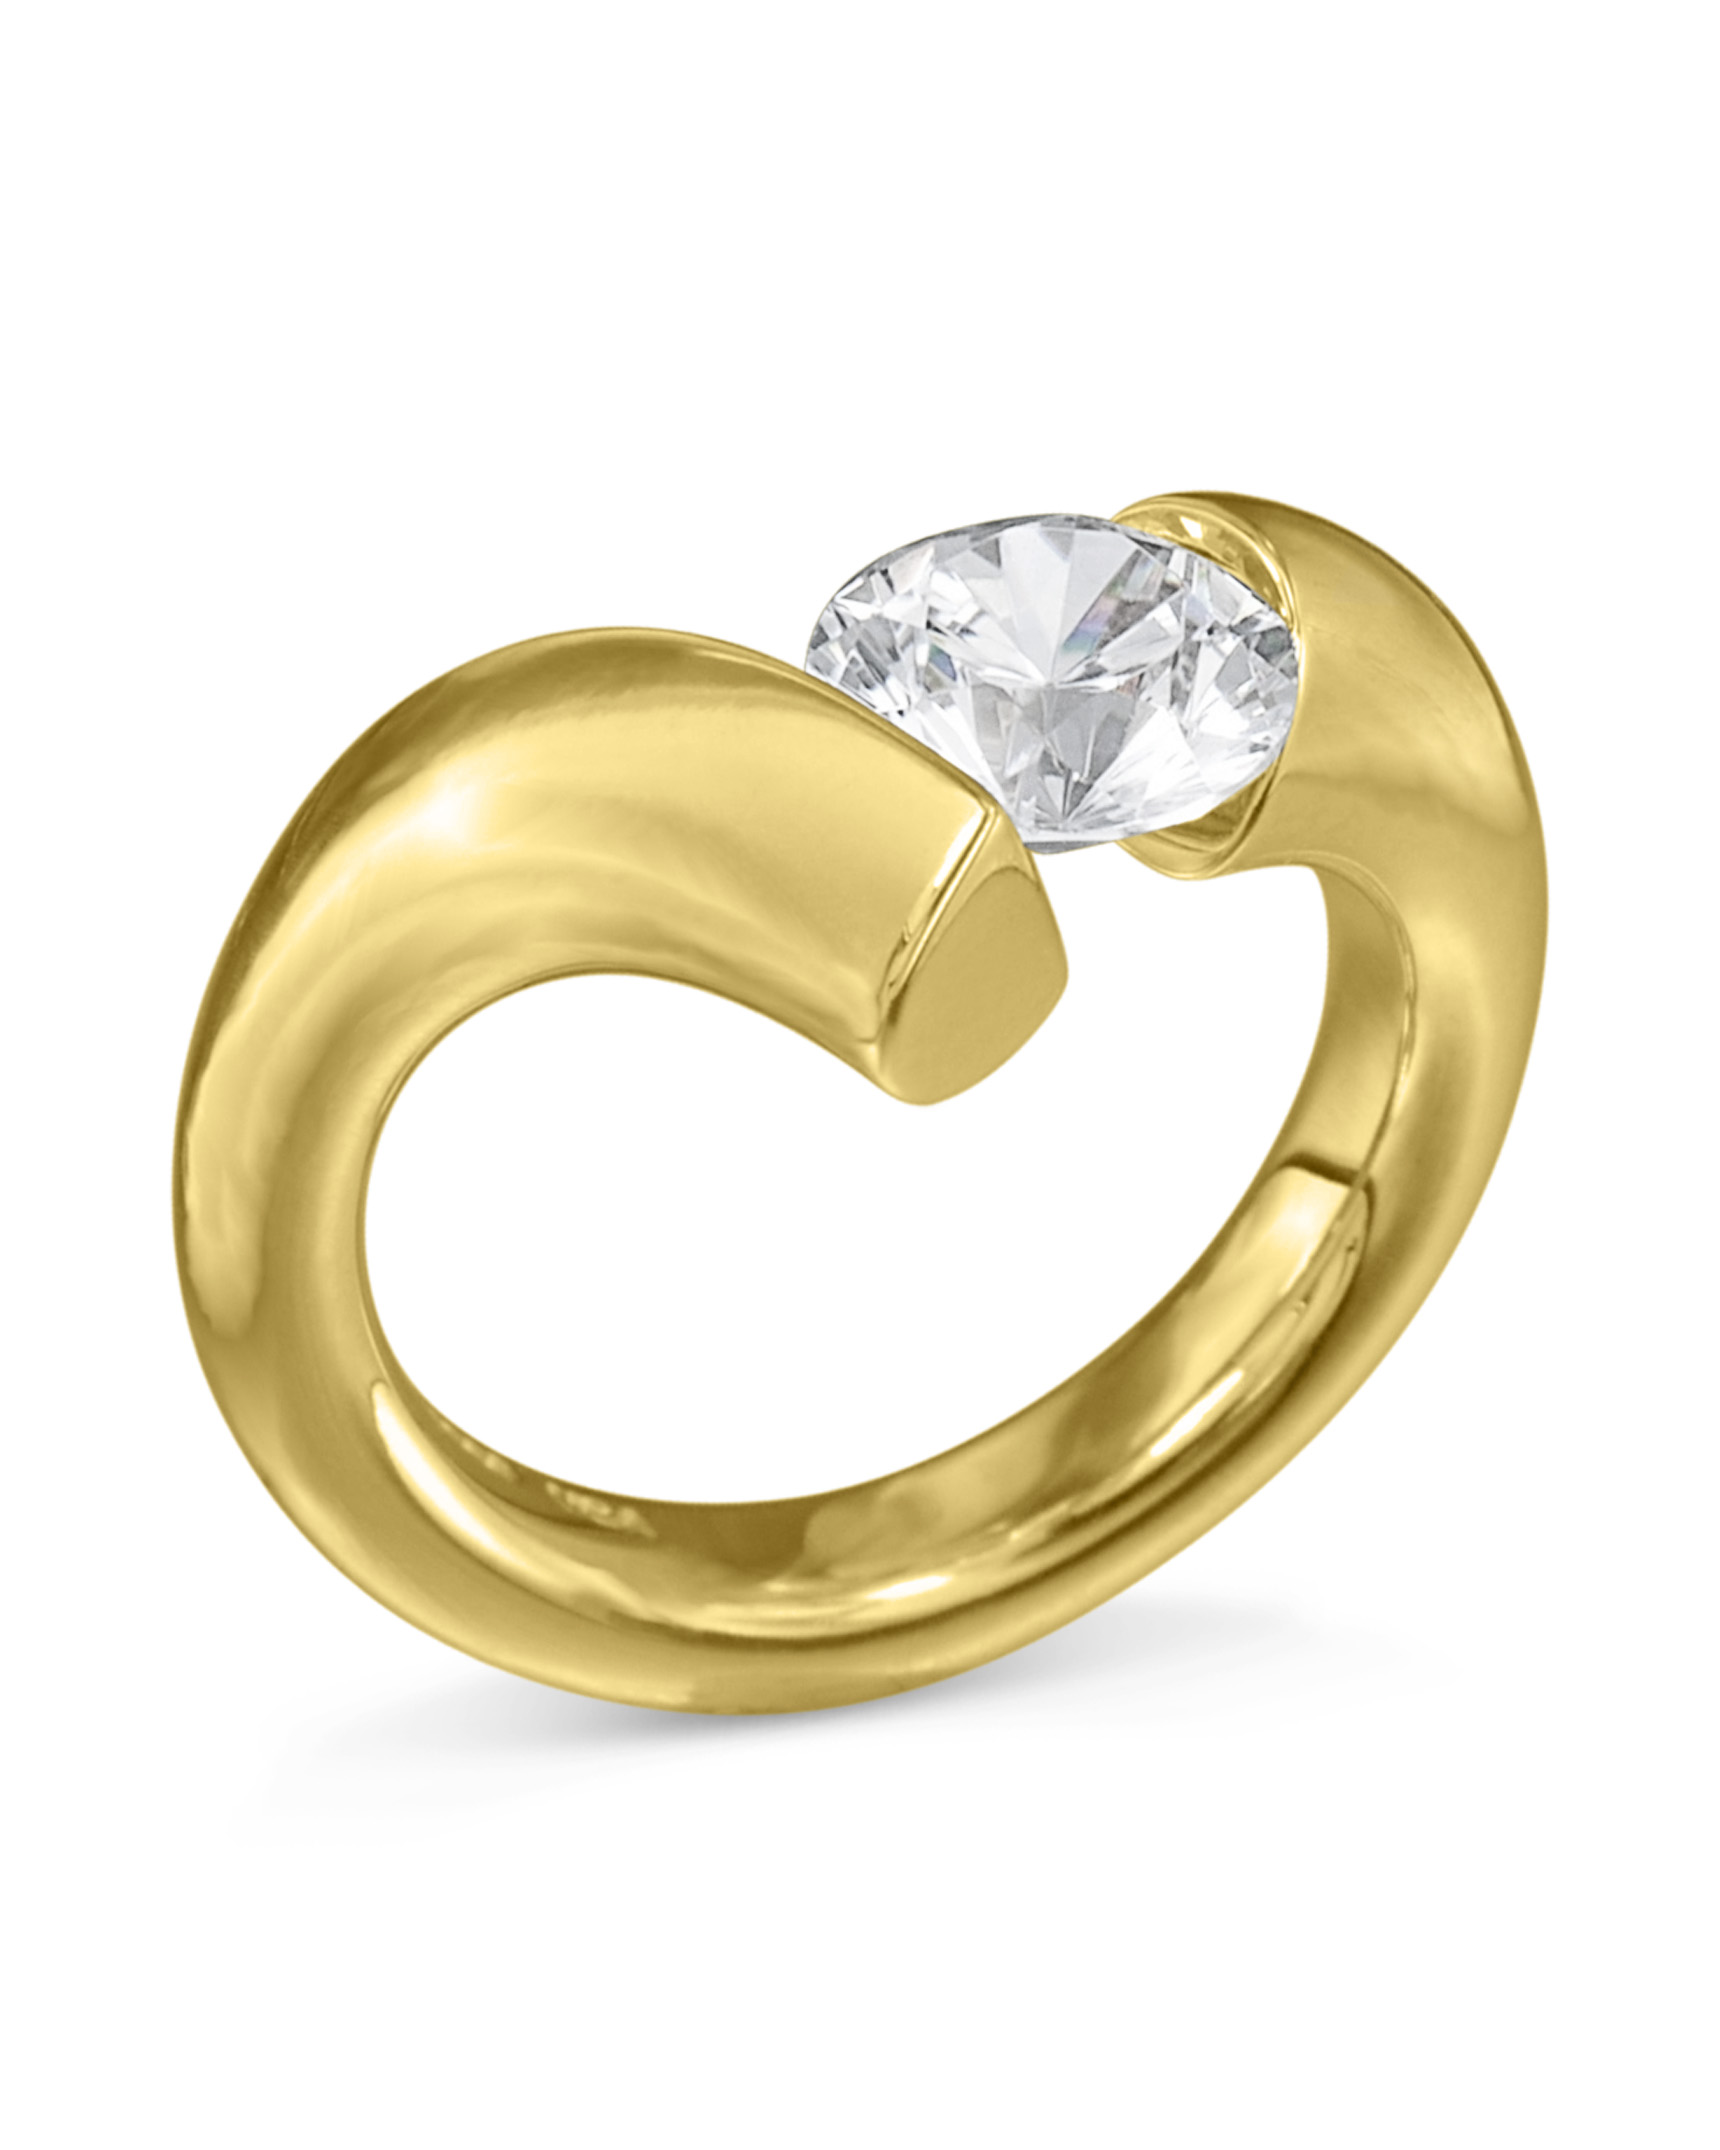 Tension Set Diamond Engagement Rings | Lorel Diamonds